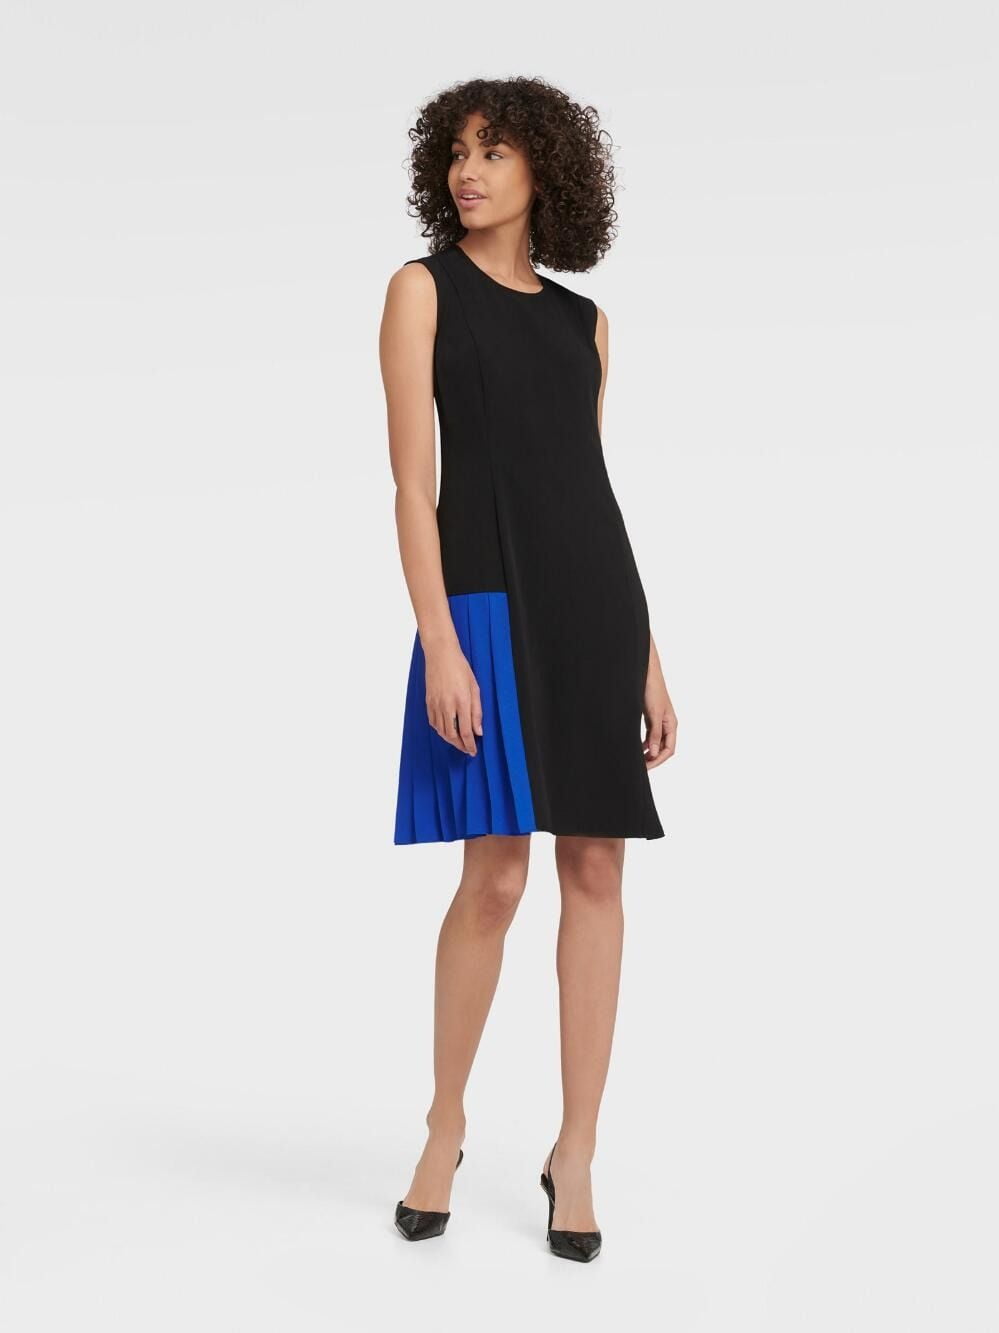 Đầm Nữ DKNY Sleeveless Colorblock Dress Black & Electric Blue